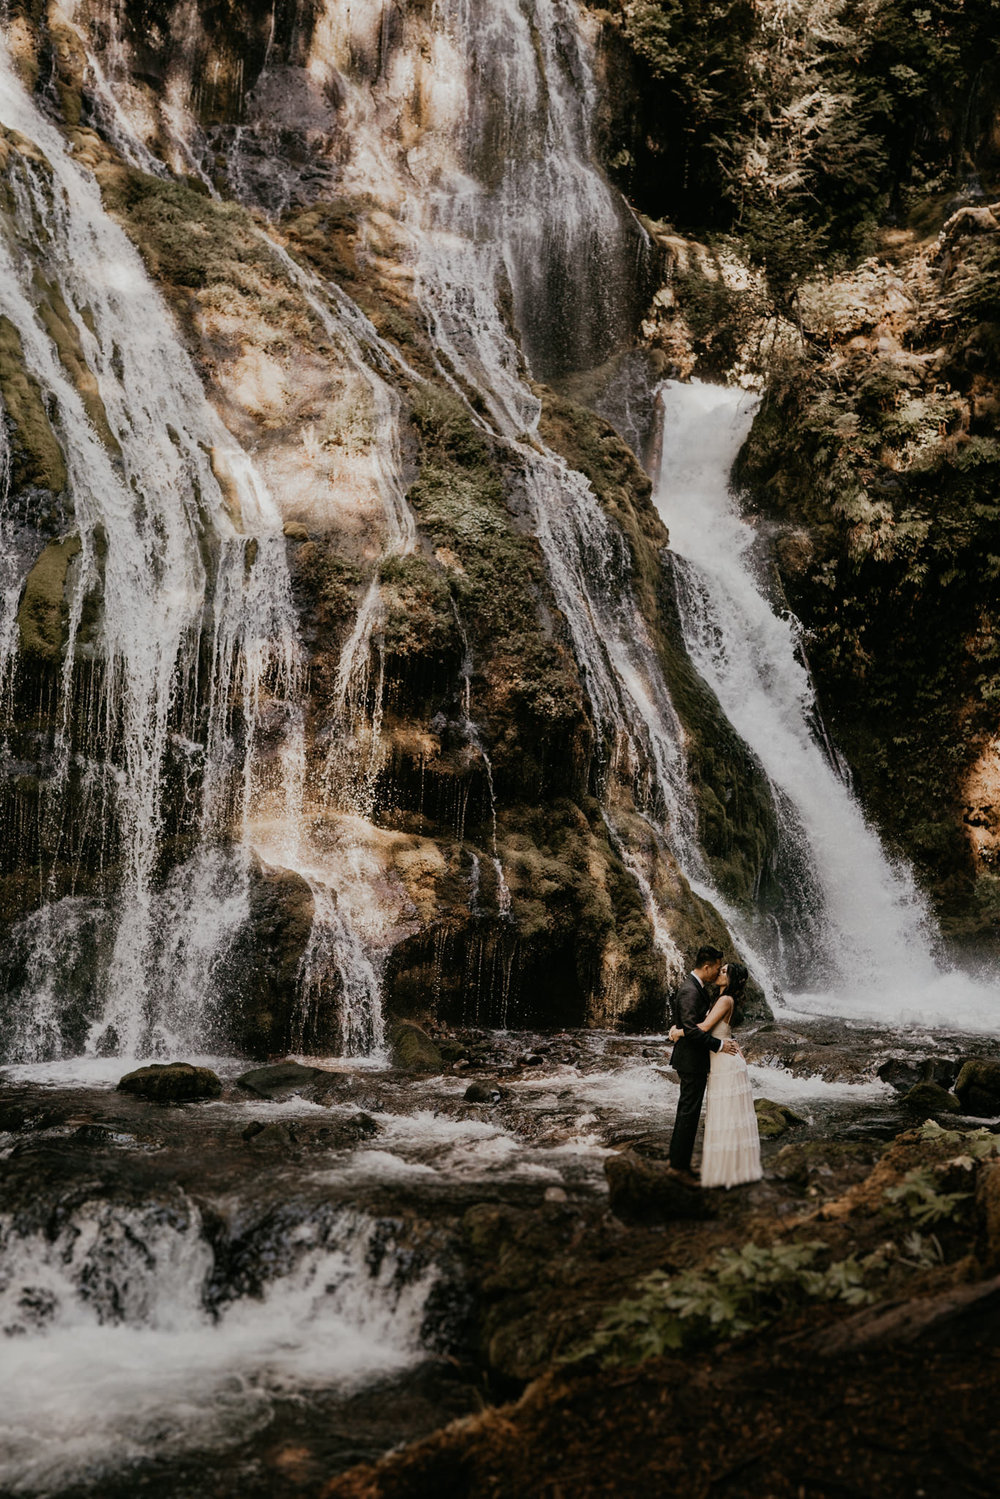 Gifford Pinchot adventure elopement by panther creek waterfalls